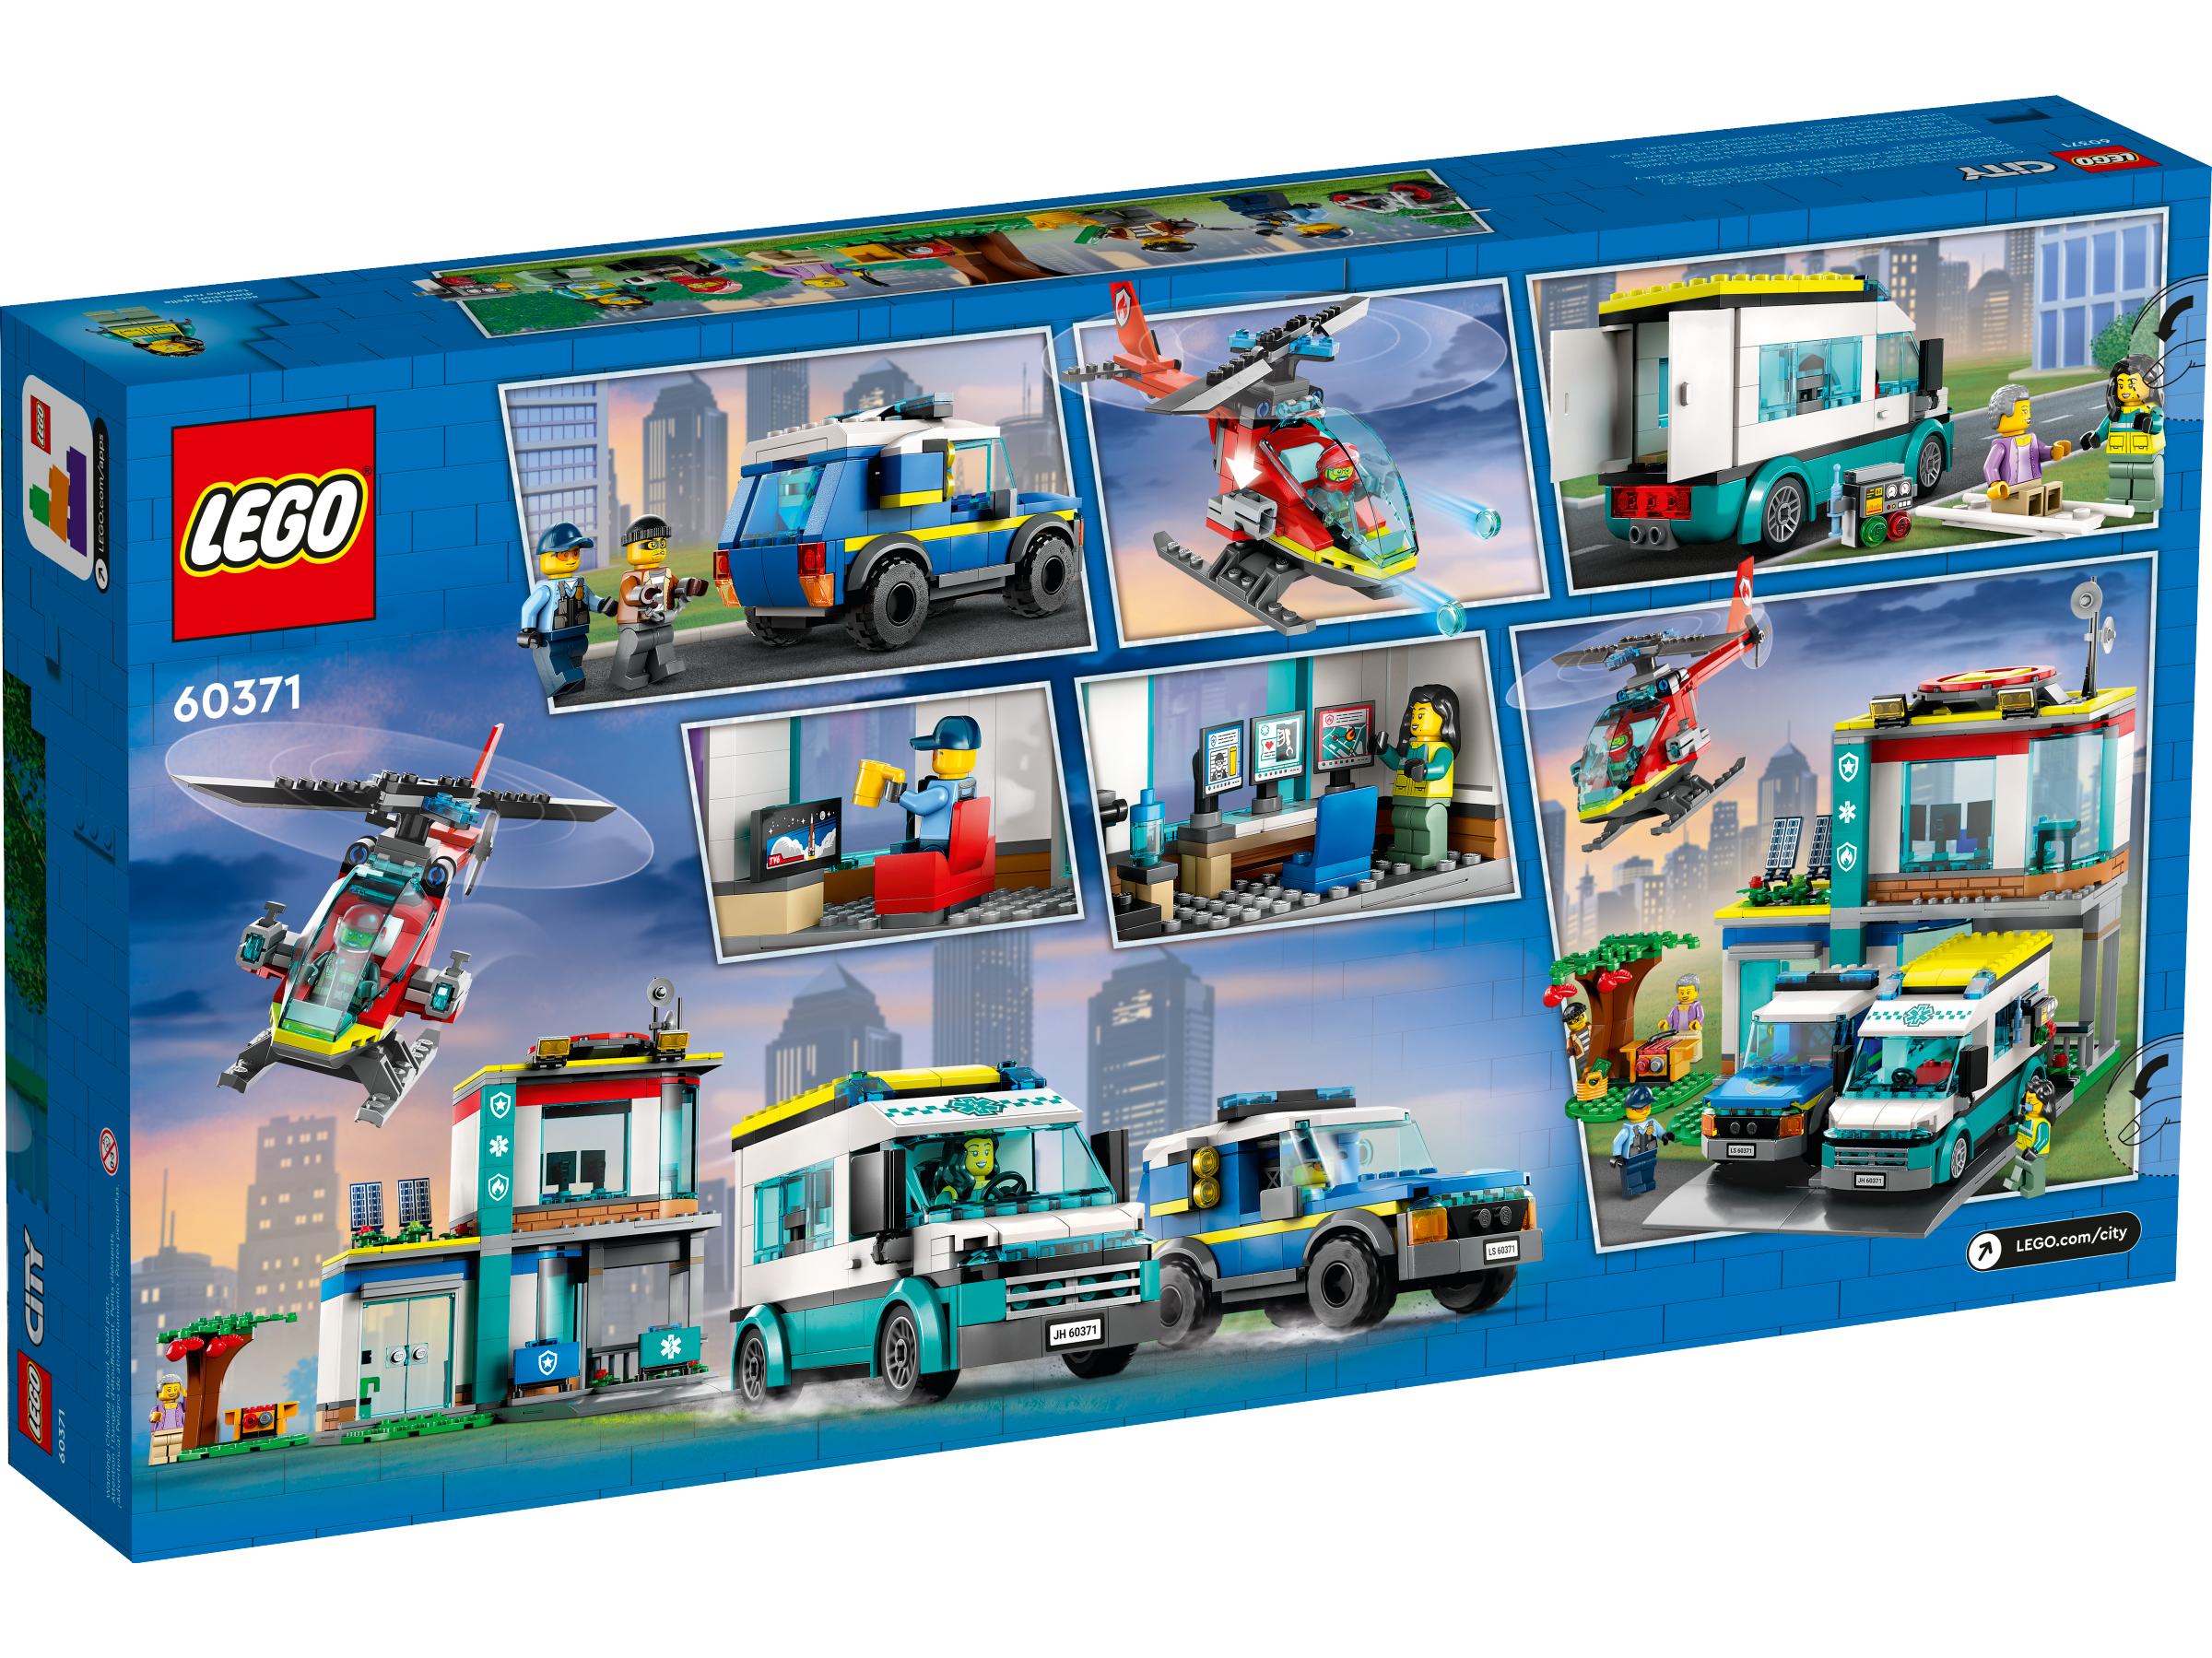 Emergency Vehicles HQ 60371, City